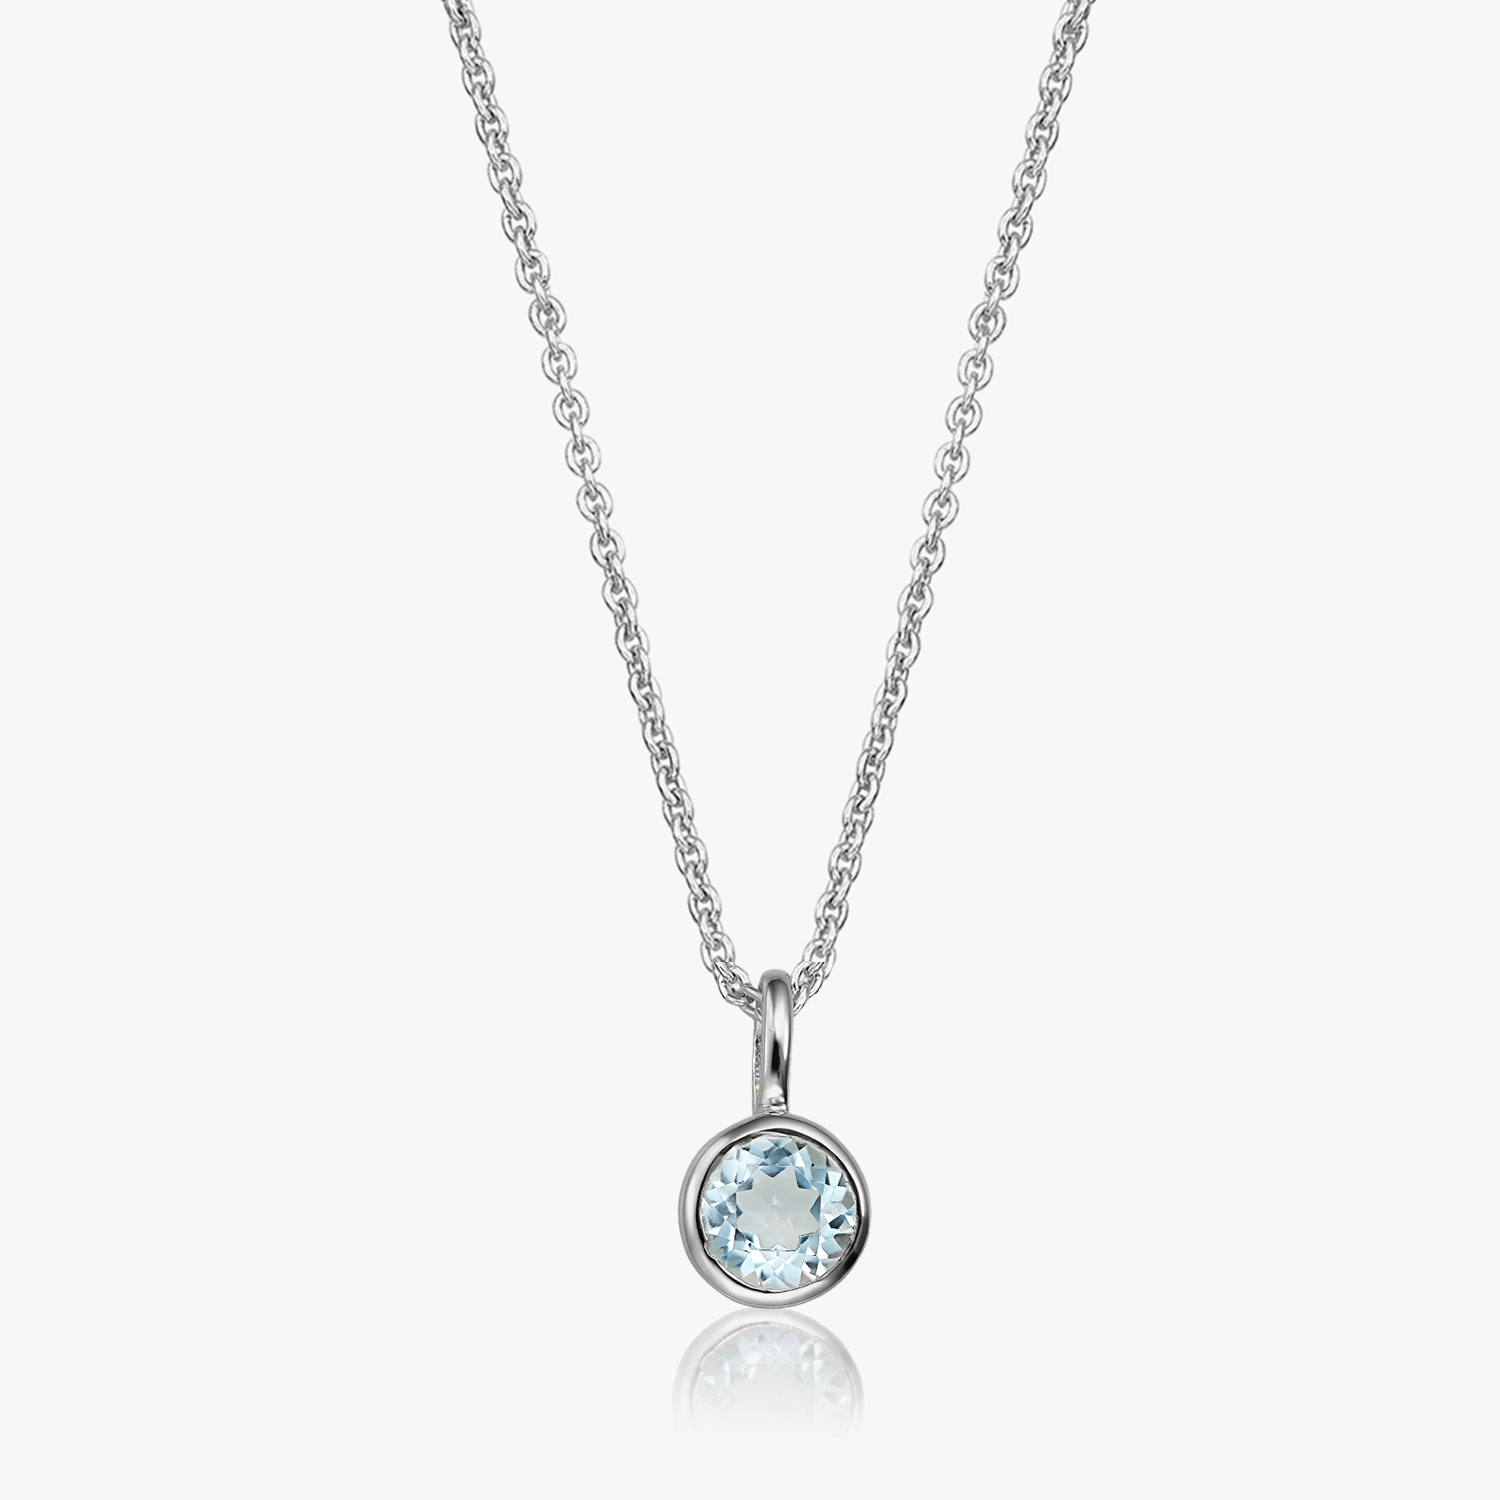 Birthstone December silver necklace - Blue Topaz